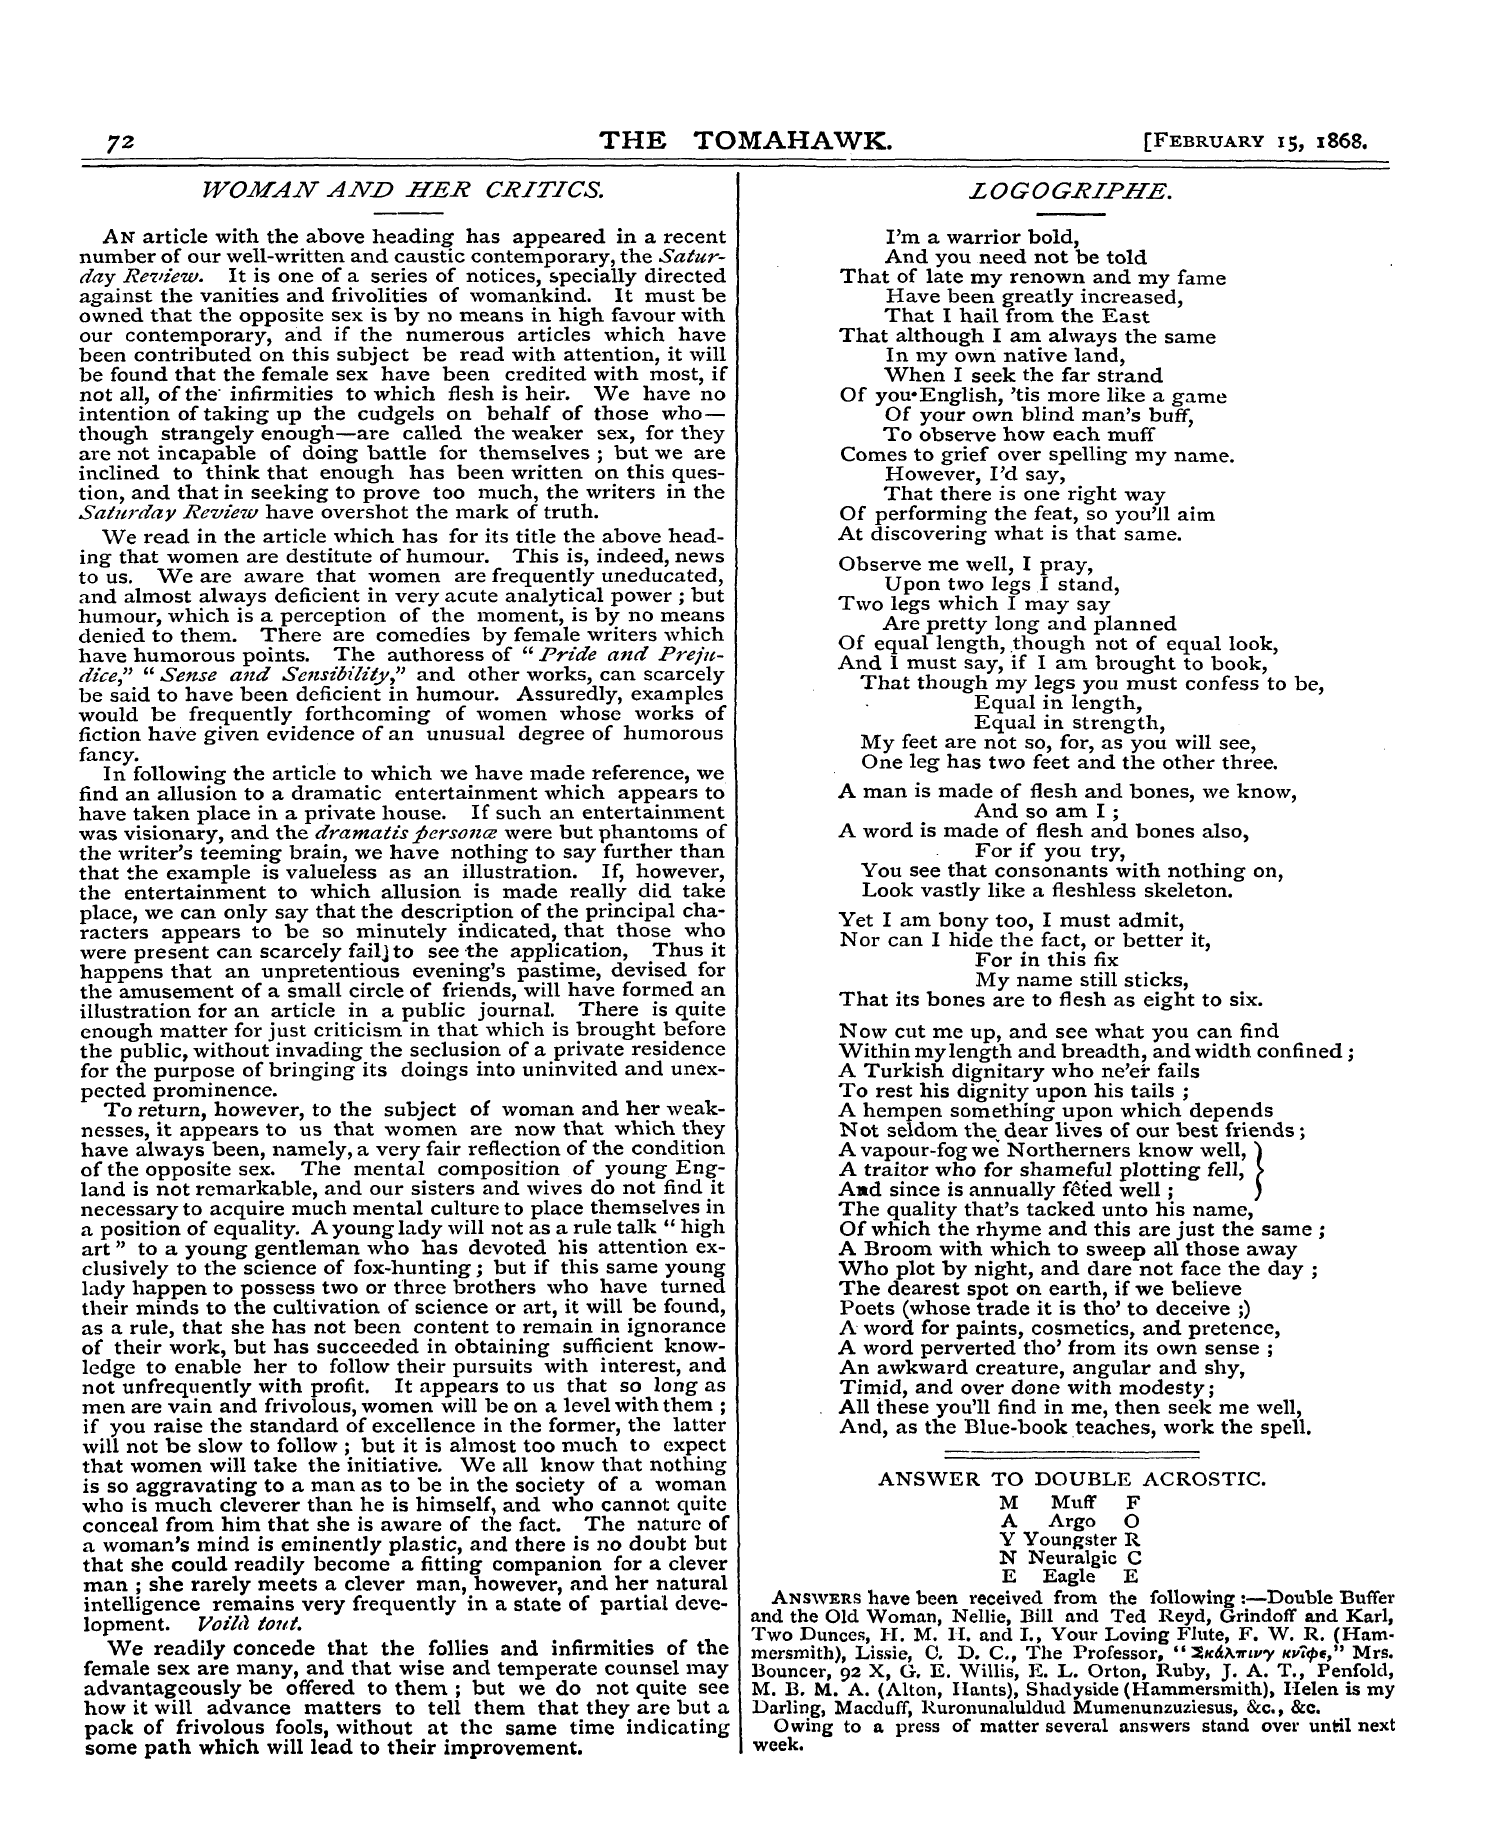 Tomahawk (1867-1870): jS F Y, 1st edition - Logogriphe.